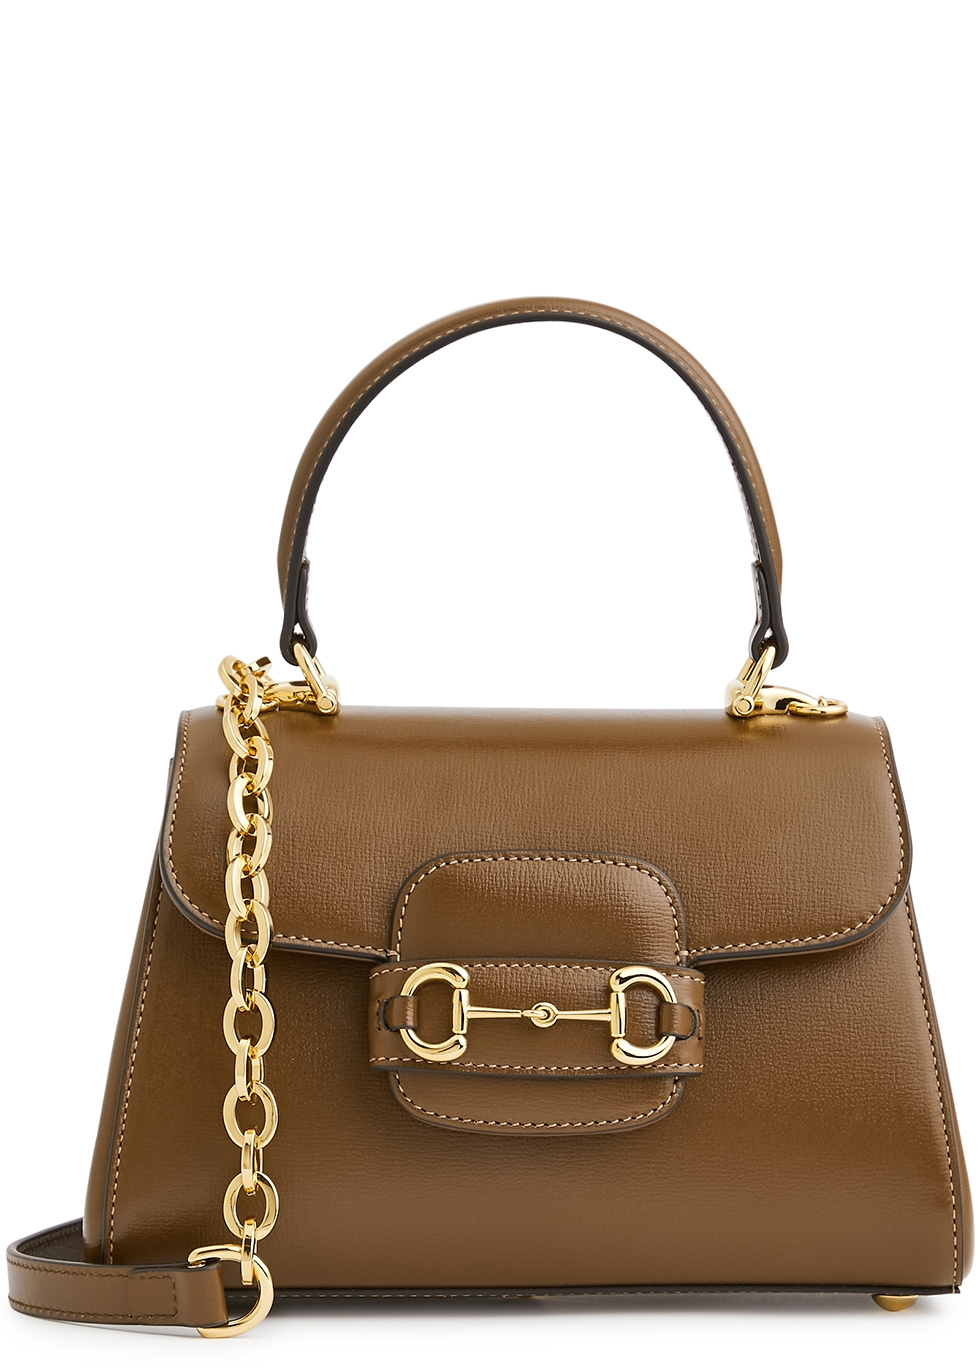 Gucci 1955 Horsebit leather top handle bag - Harvey Nichols